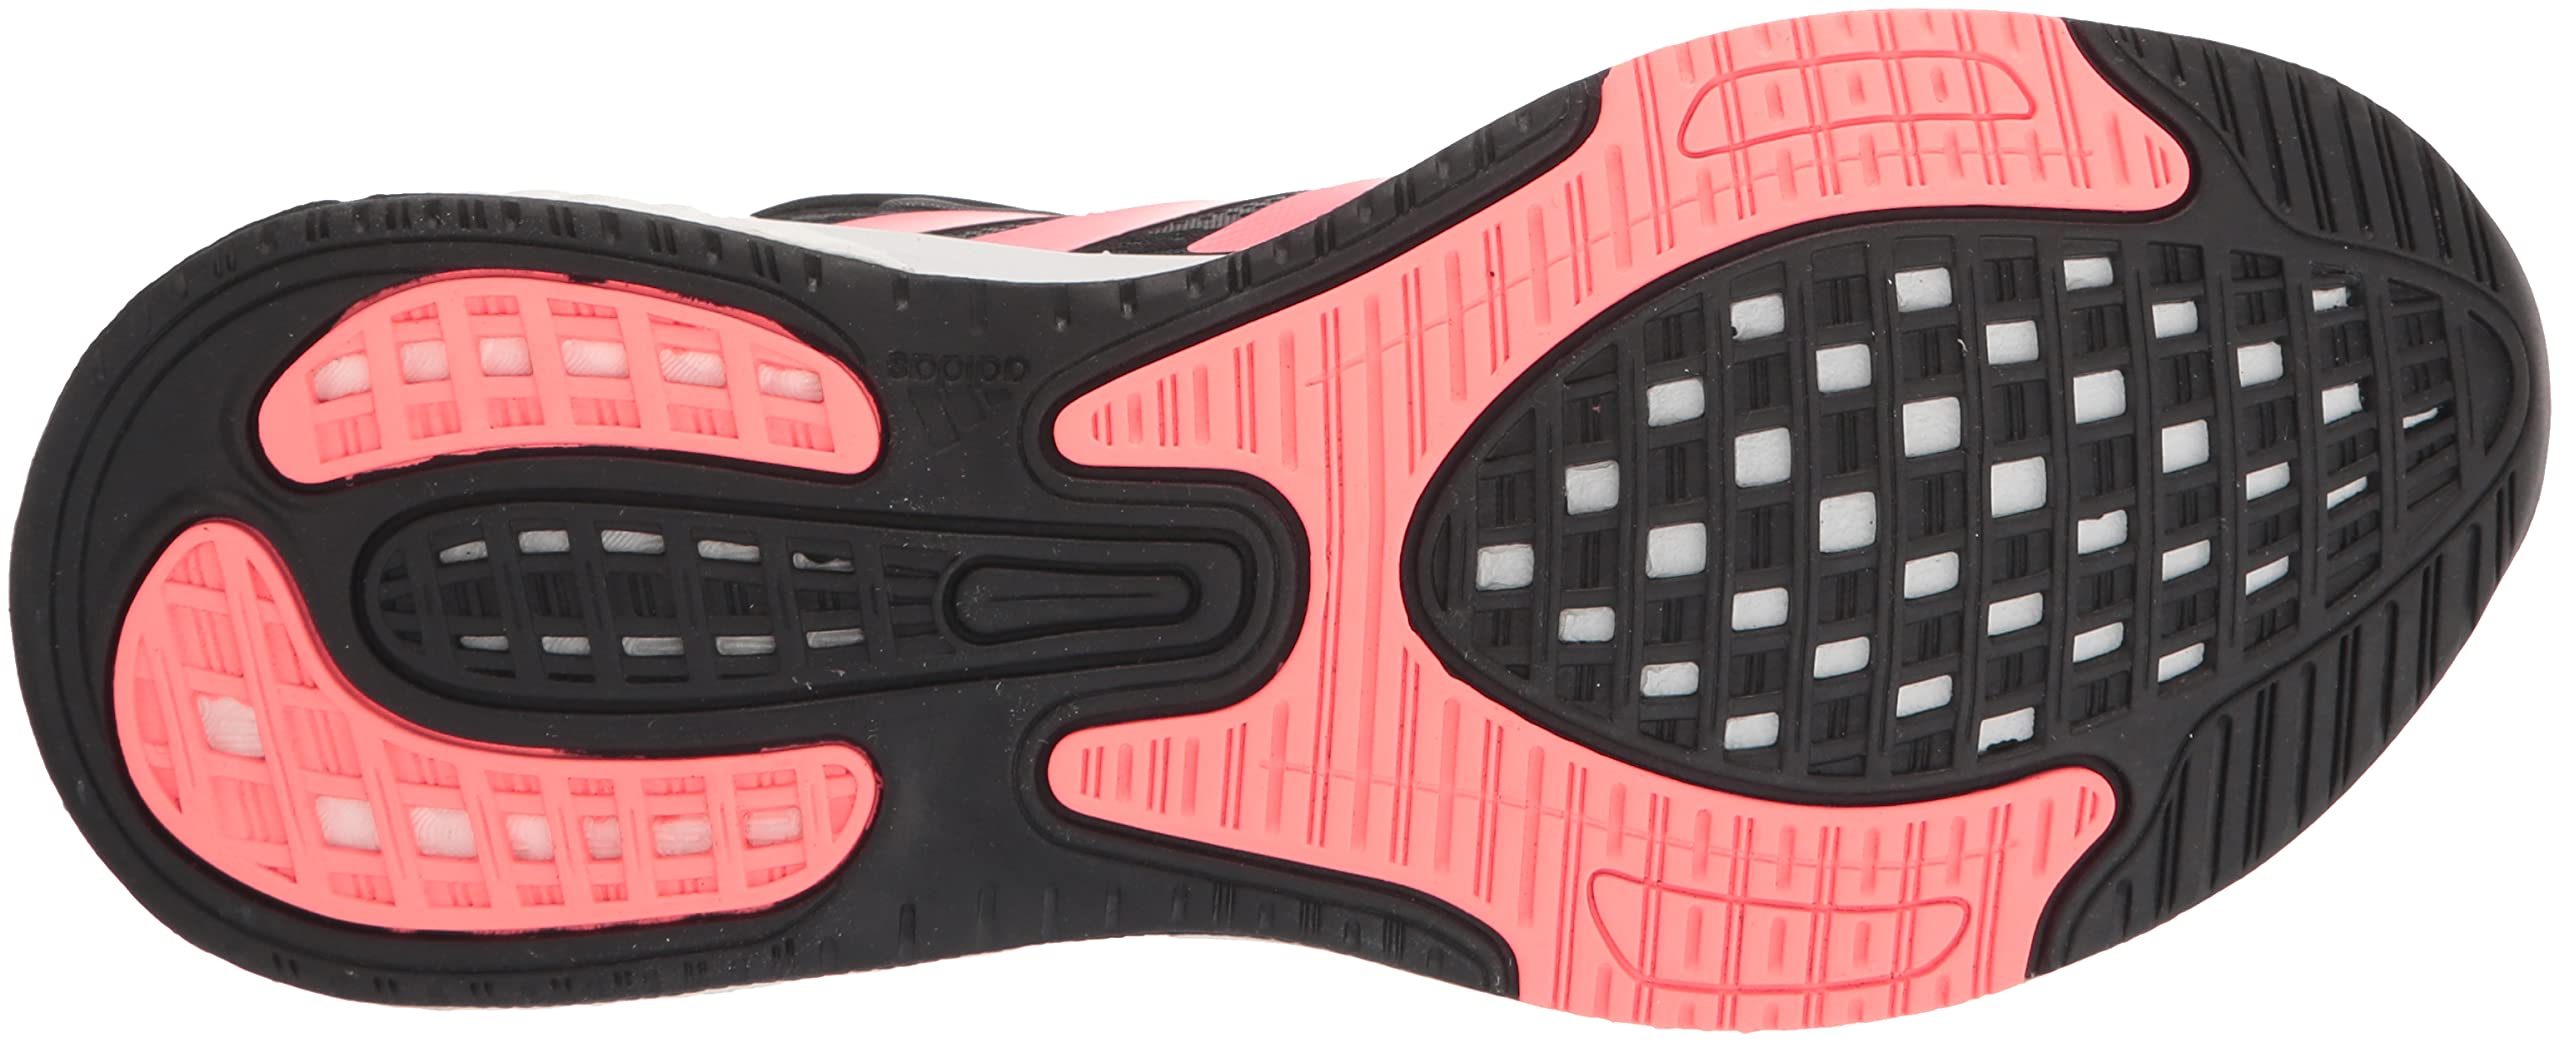 adidas Women's Supernova Running Shoe